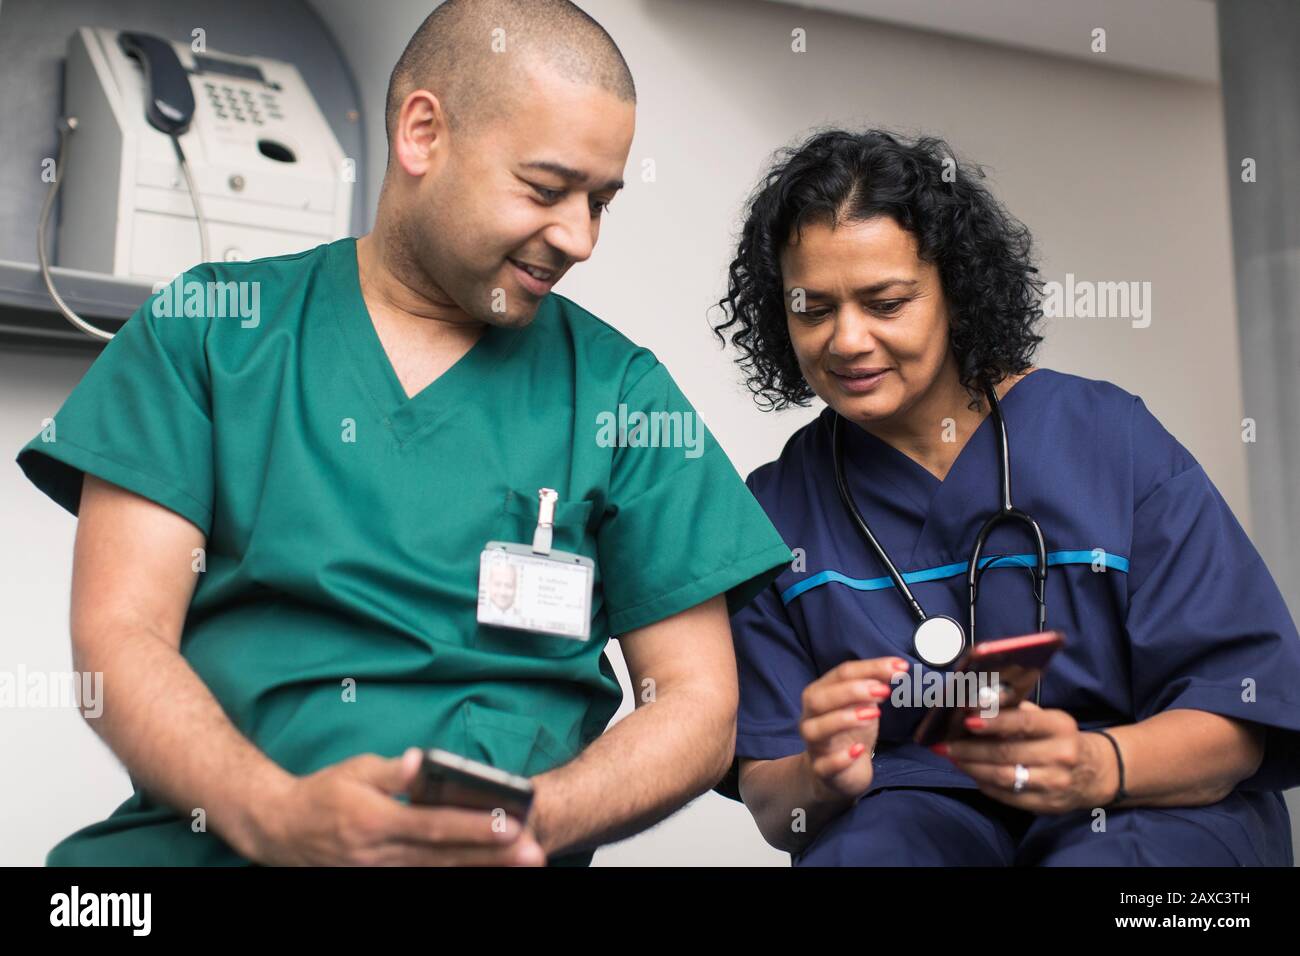 Doctor and surgeon using smart phones Stock Photo